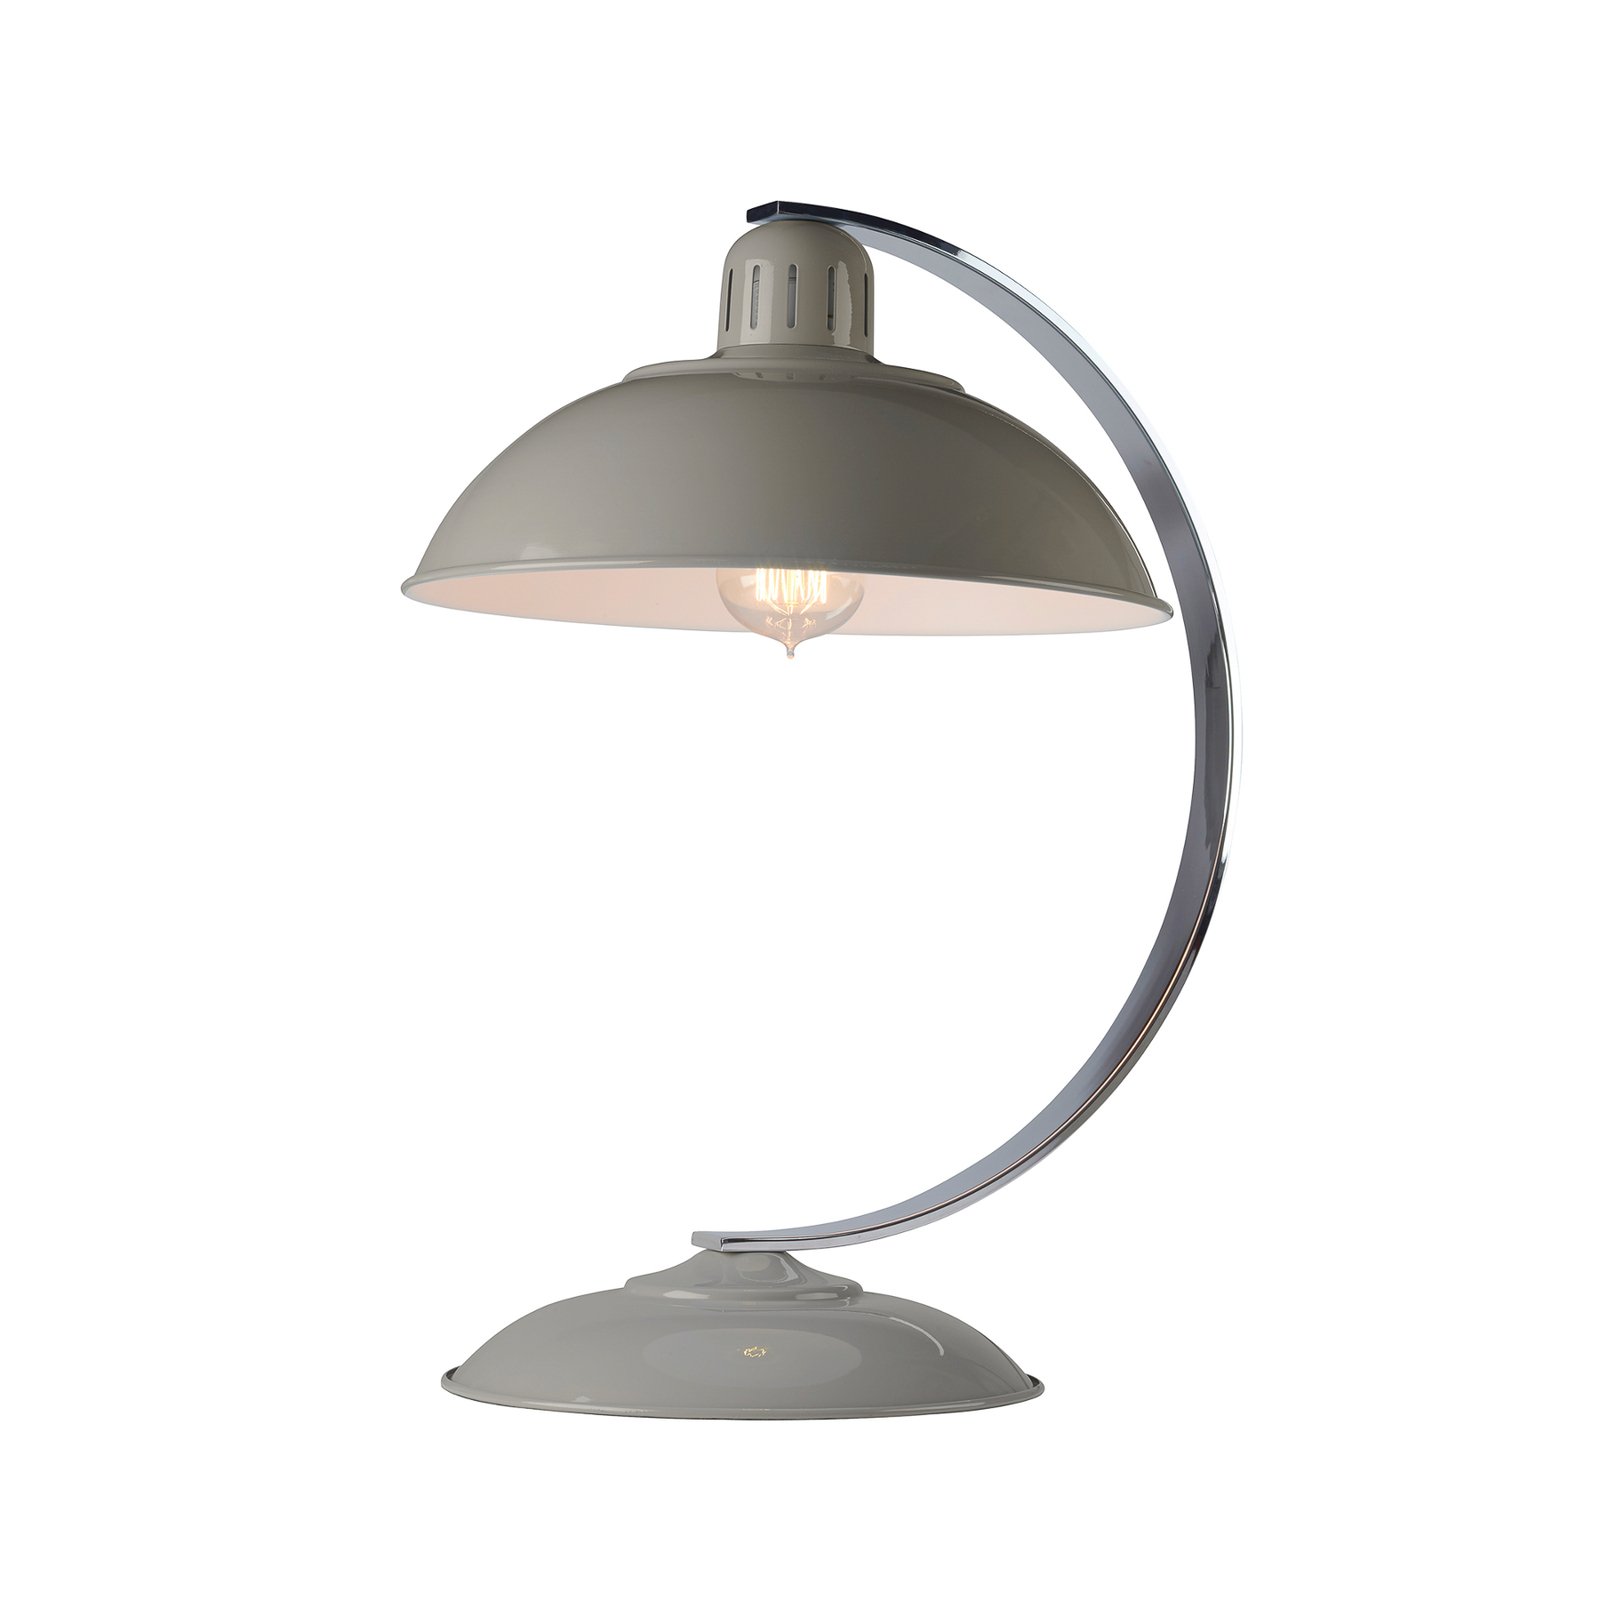 Franklin retro style table lamp, grey